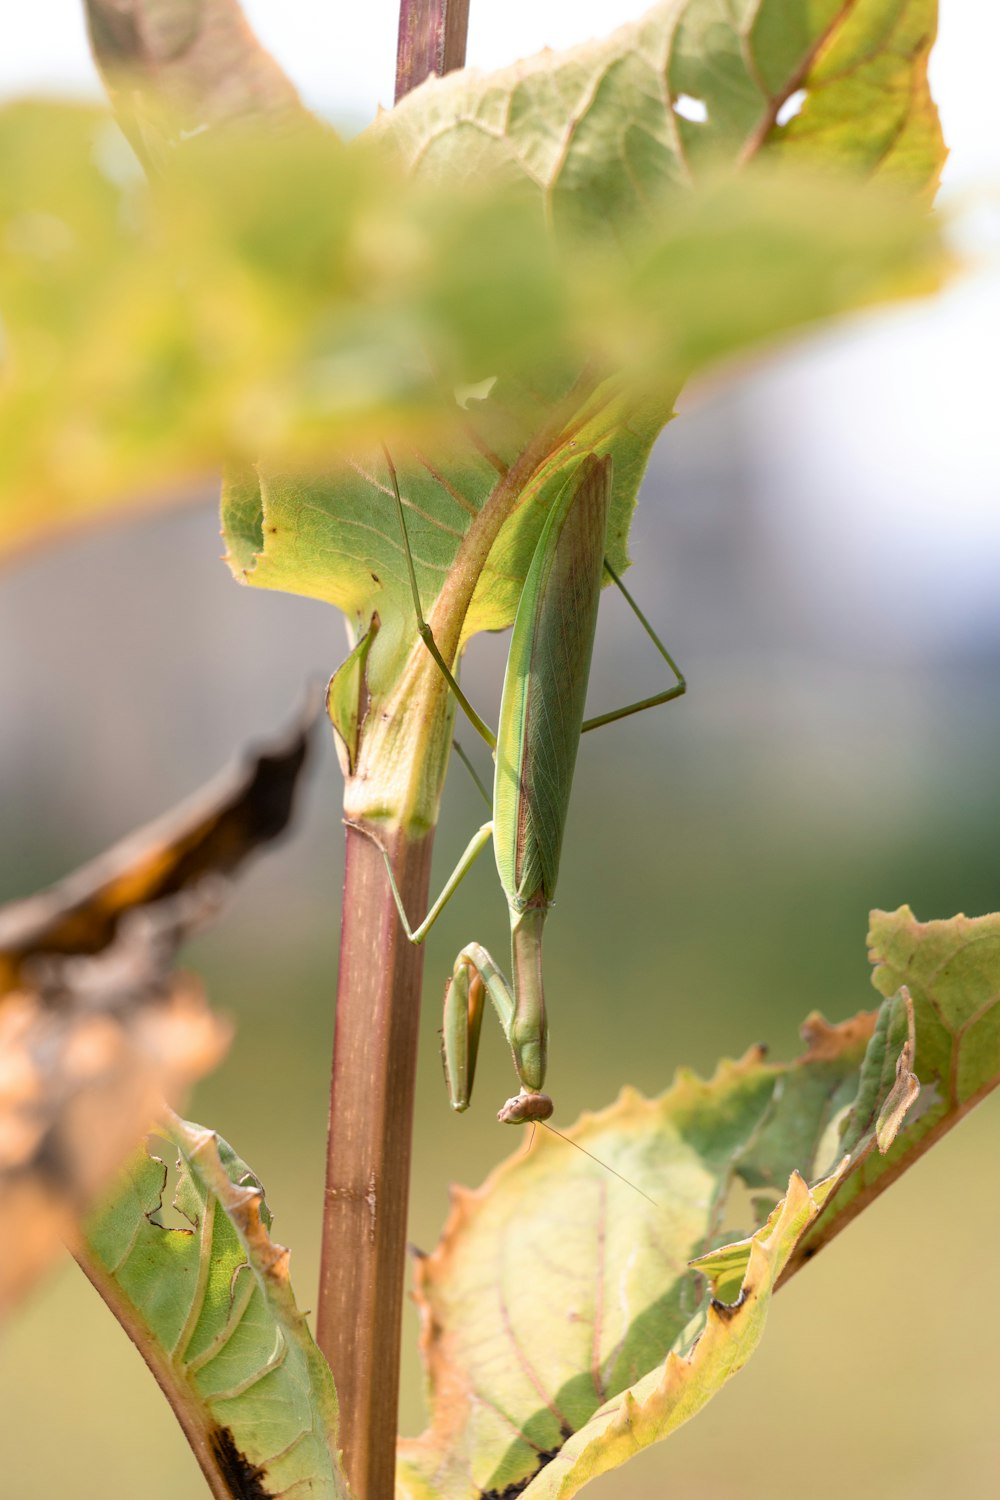 green praying mantis on green leaf in close up photography during daytime